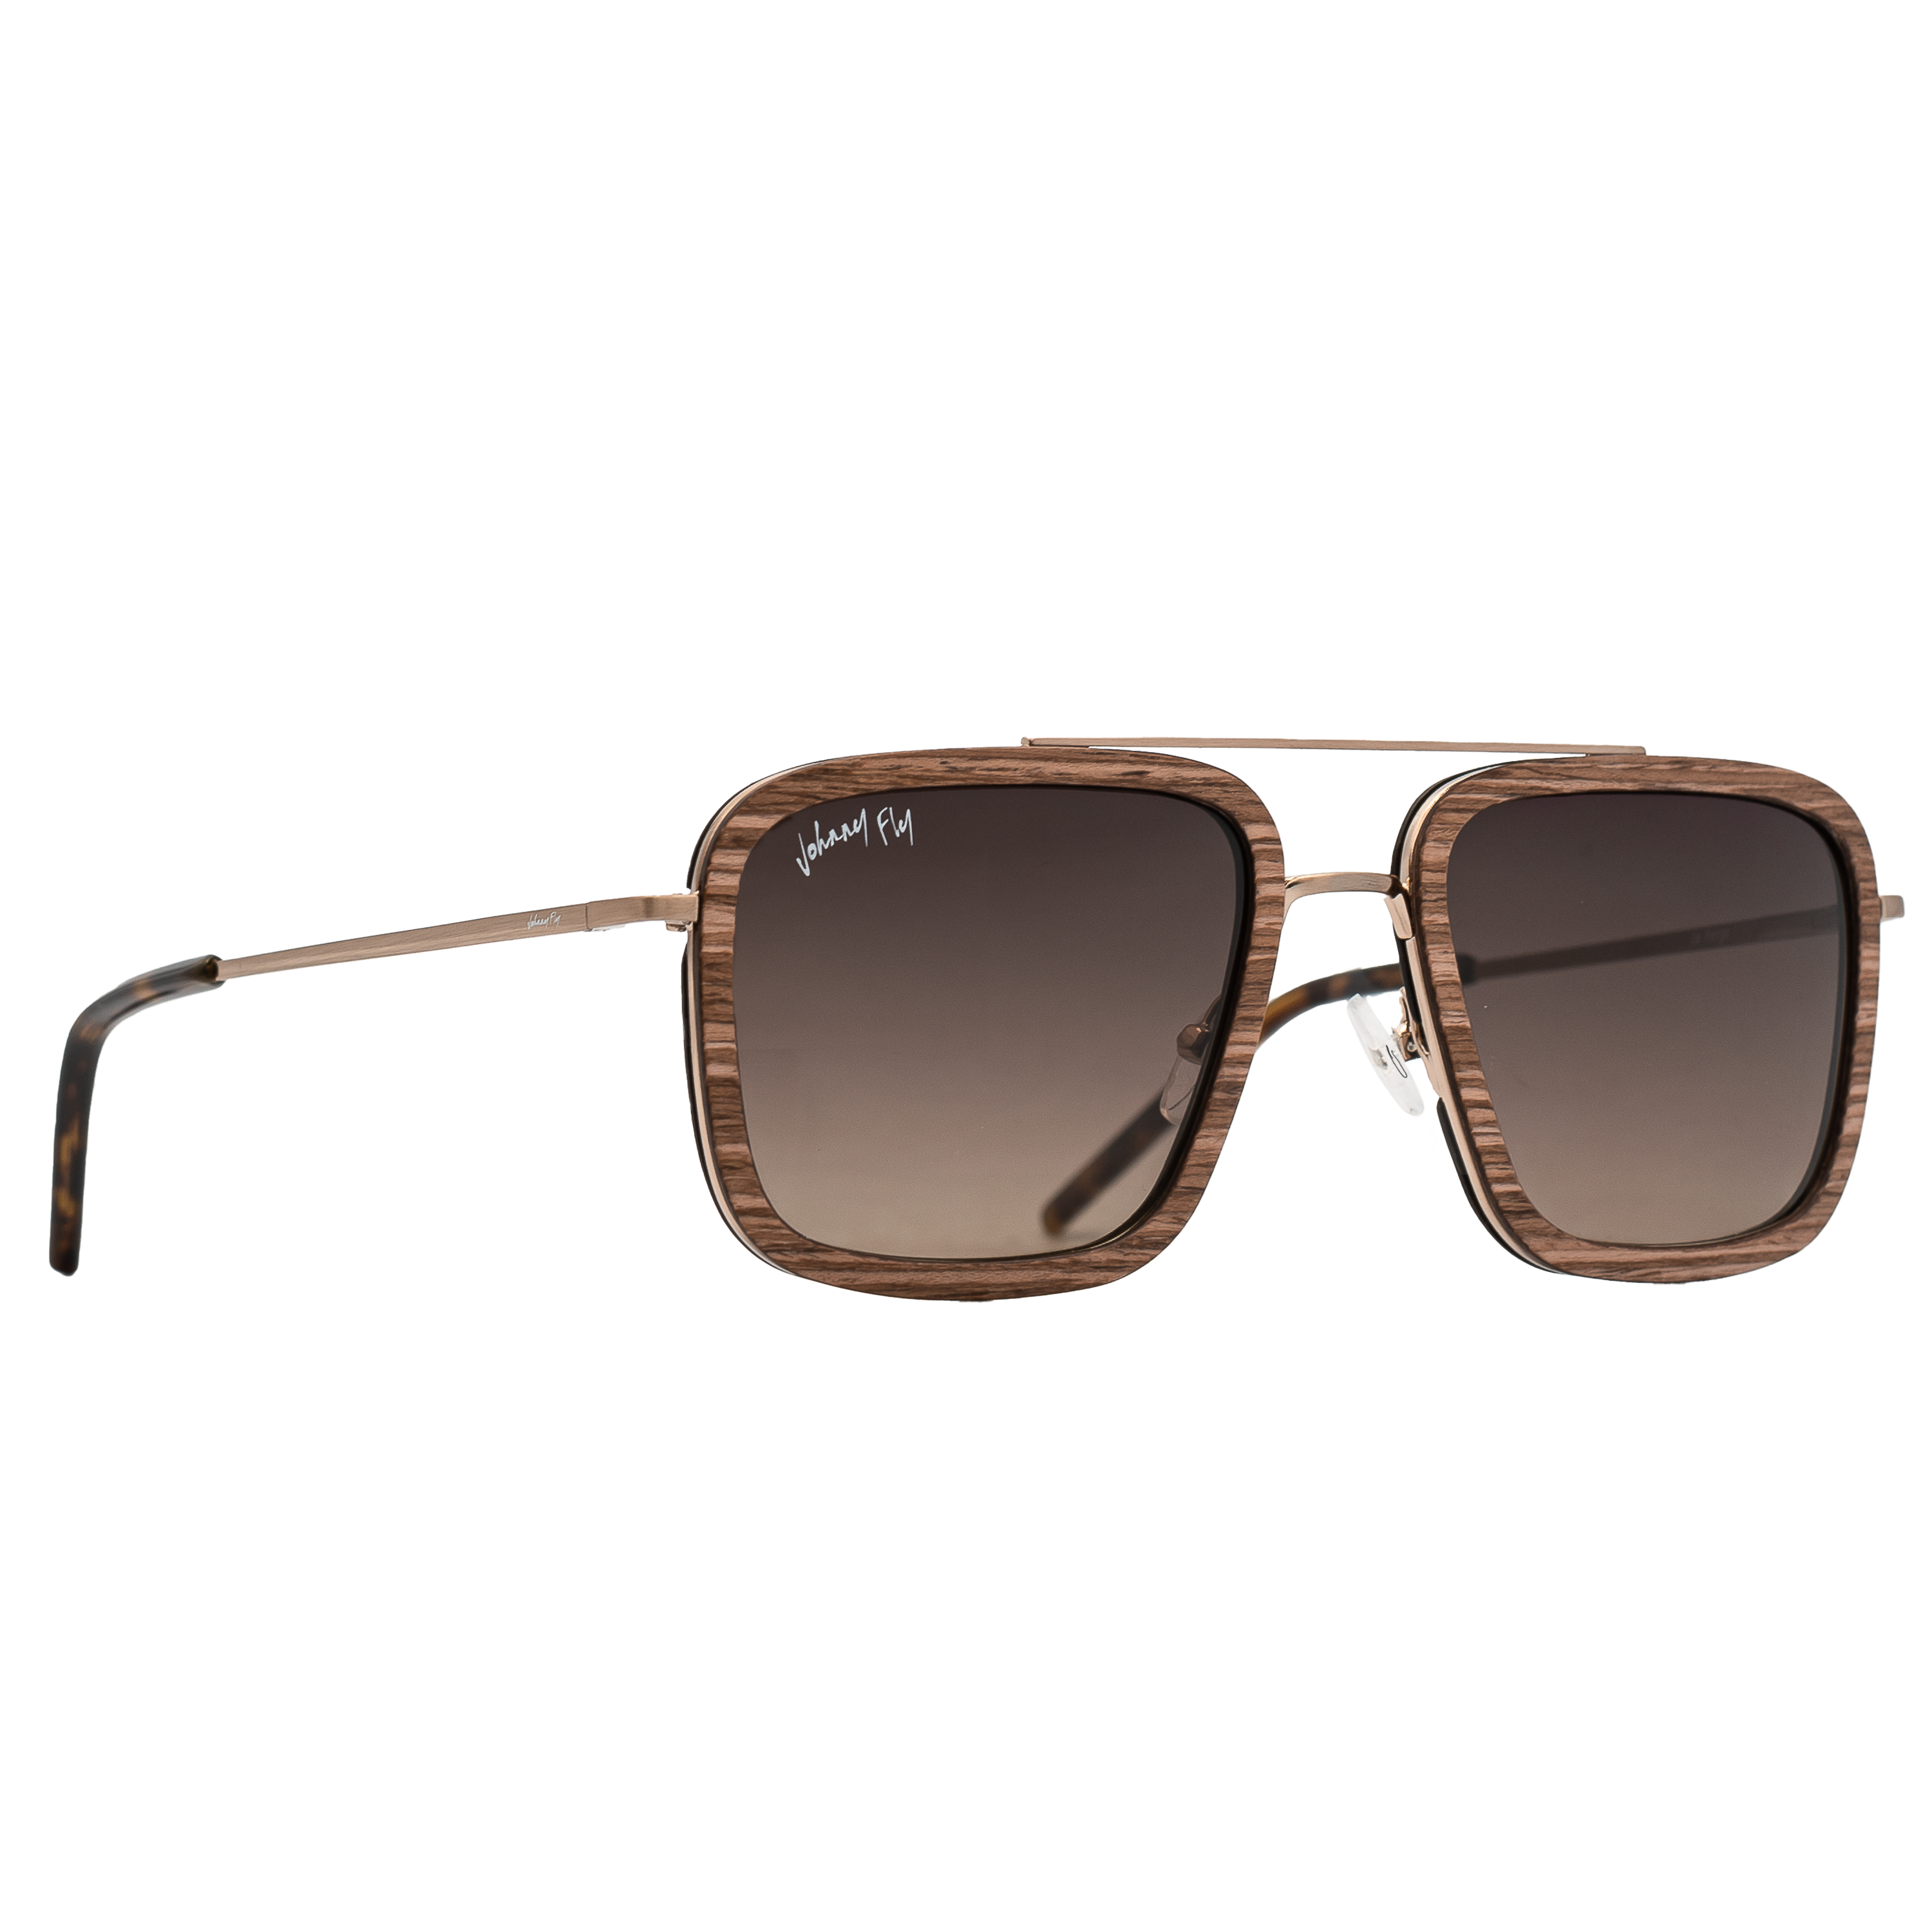 LaForge Sunglasses